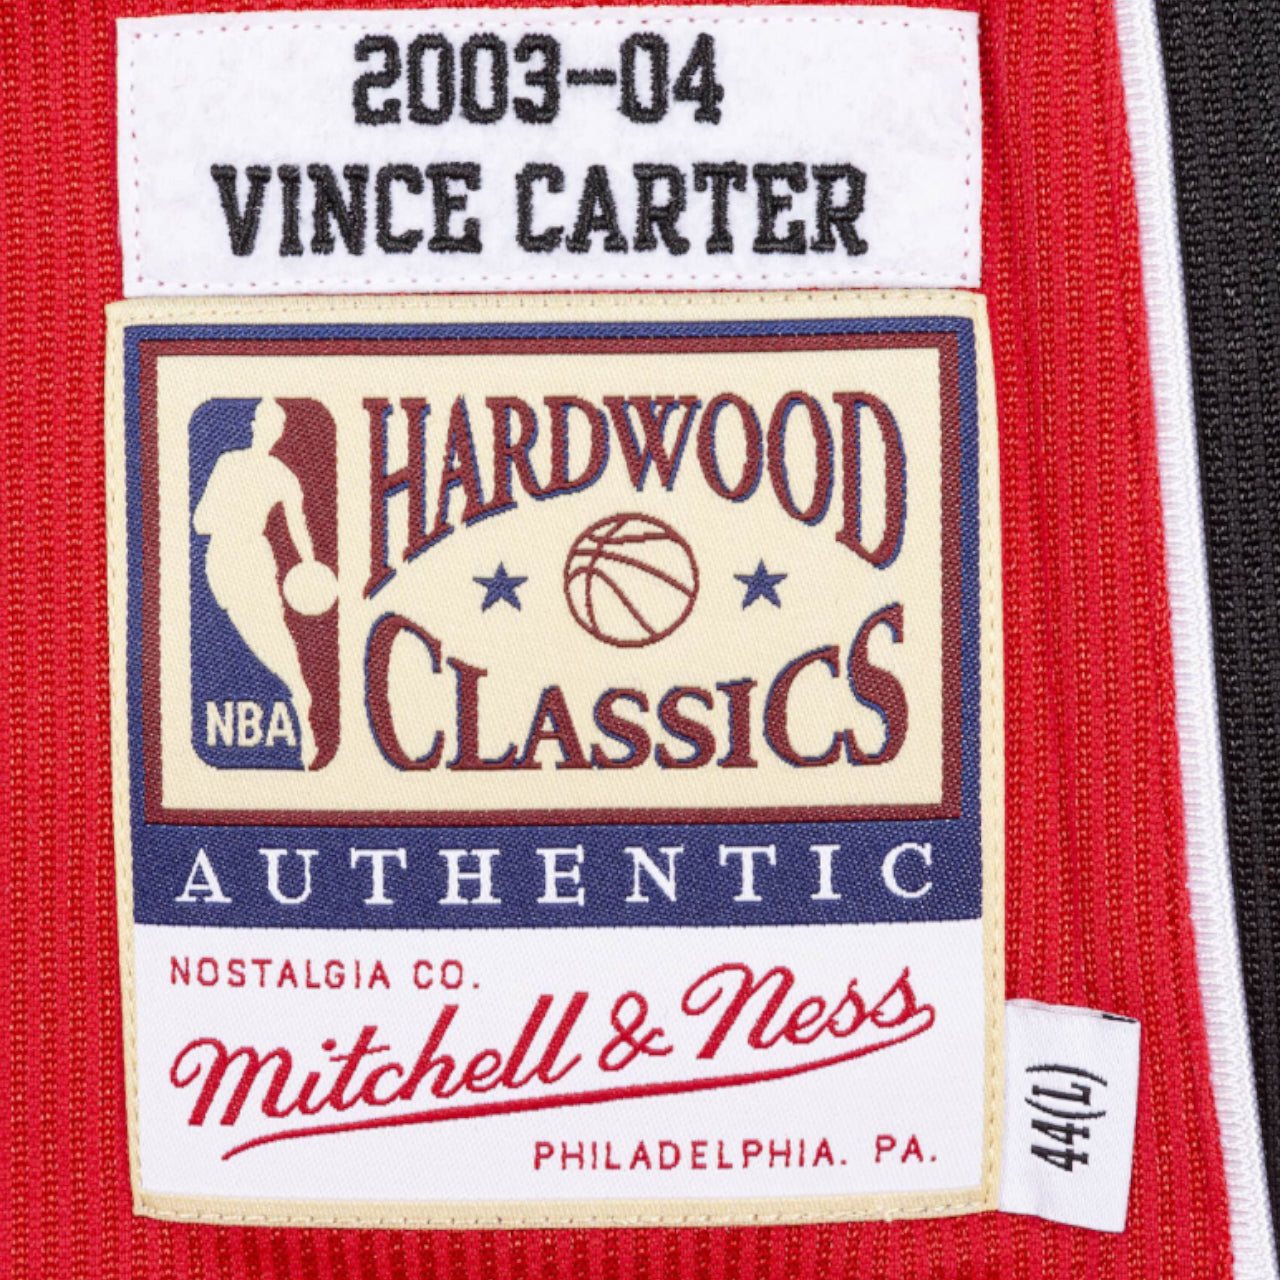 Vince Carter Toronto Raptors 2003-2004 Hardwood Classic Alternate Mitchell & Ness Authentic Jersey - Red